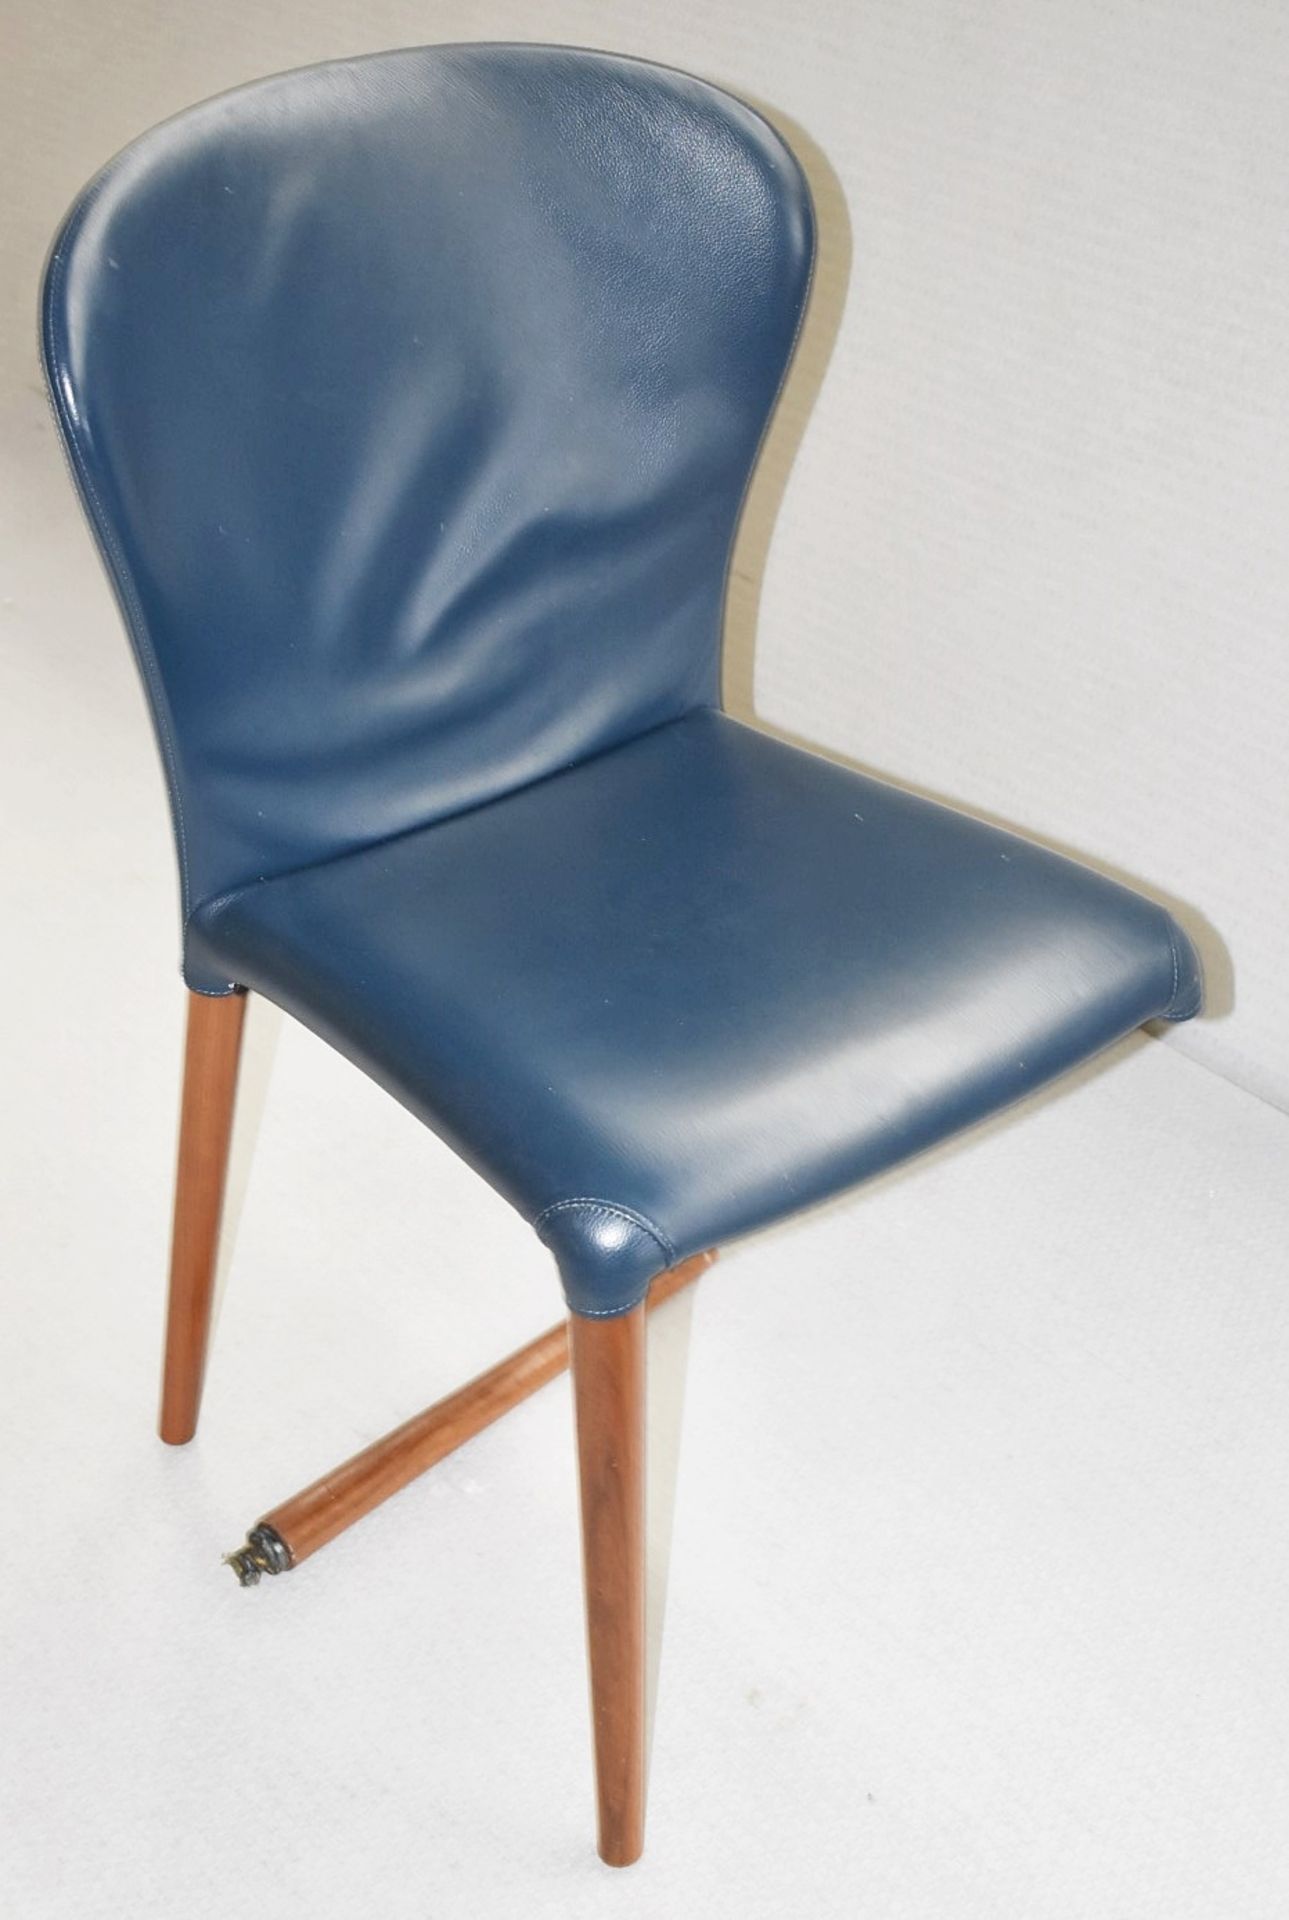 1 x PORADA 'Astrid' Italian Designer Leather Upholstered Chair, In Blue - Original Price £1,110 - Image 3 of 5